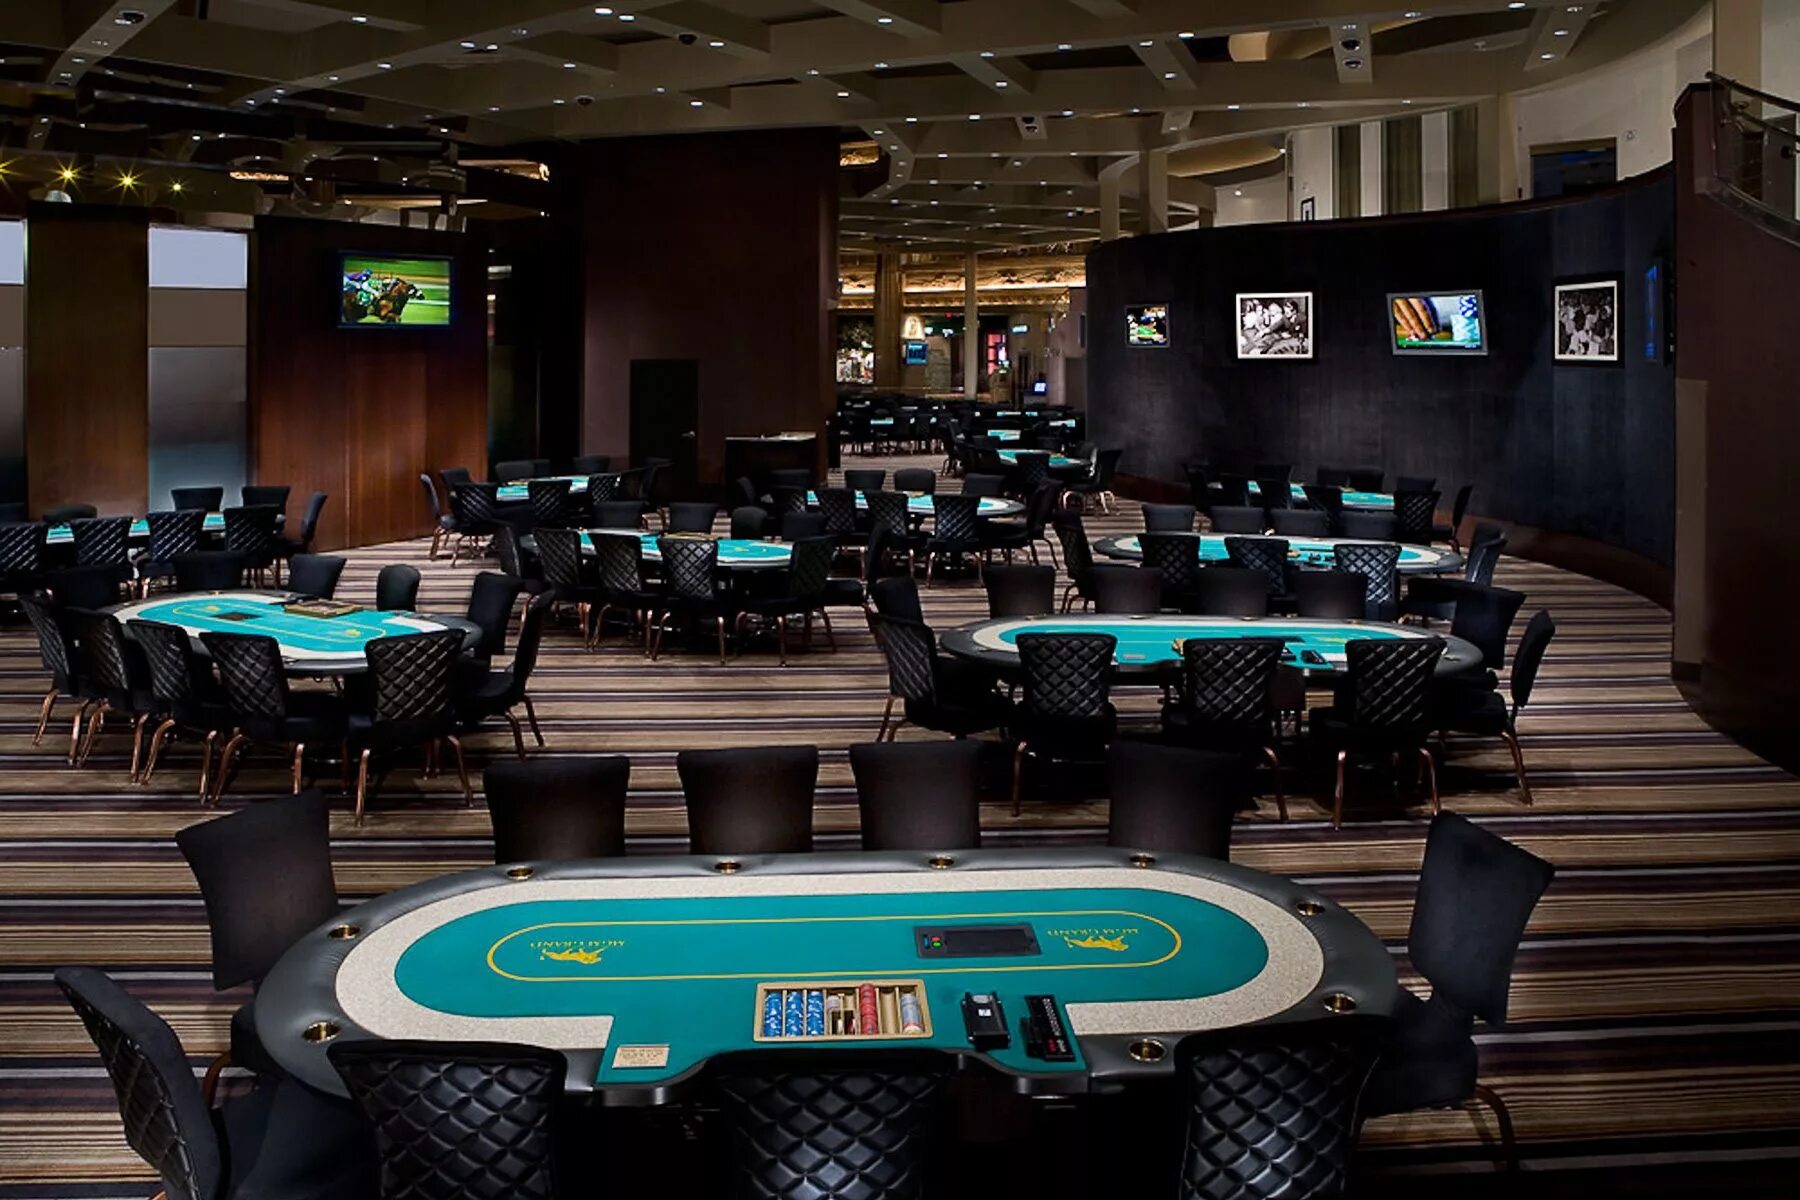 Vegas grant vegasgrandcazino. Казино MGM Grand. Казино Лас Вегас Гранд. Казино Лас Вегас покерный стол. Покерный зал казино Лас Вегас стол для покера.